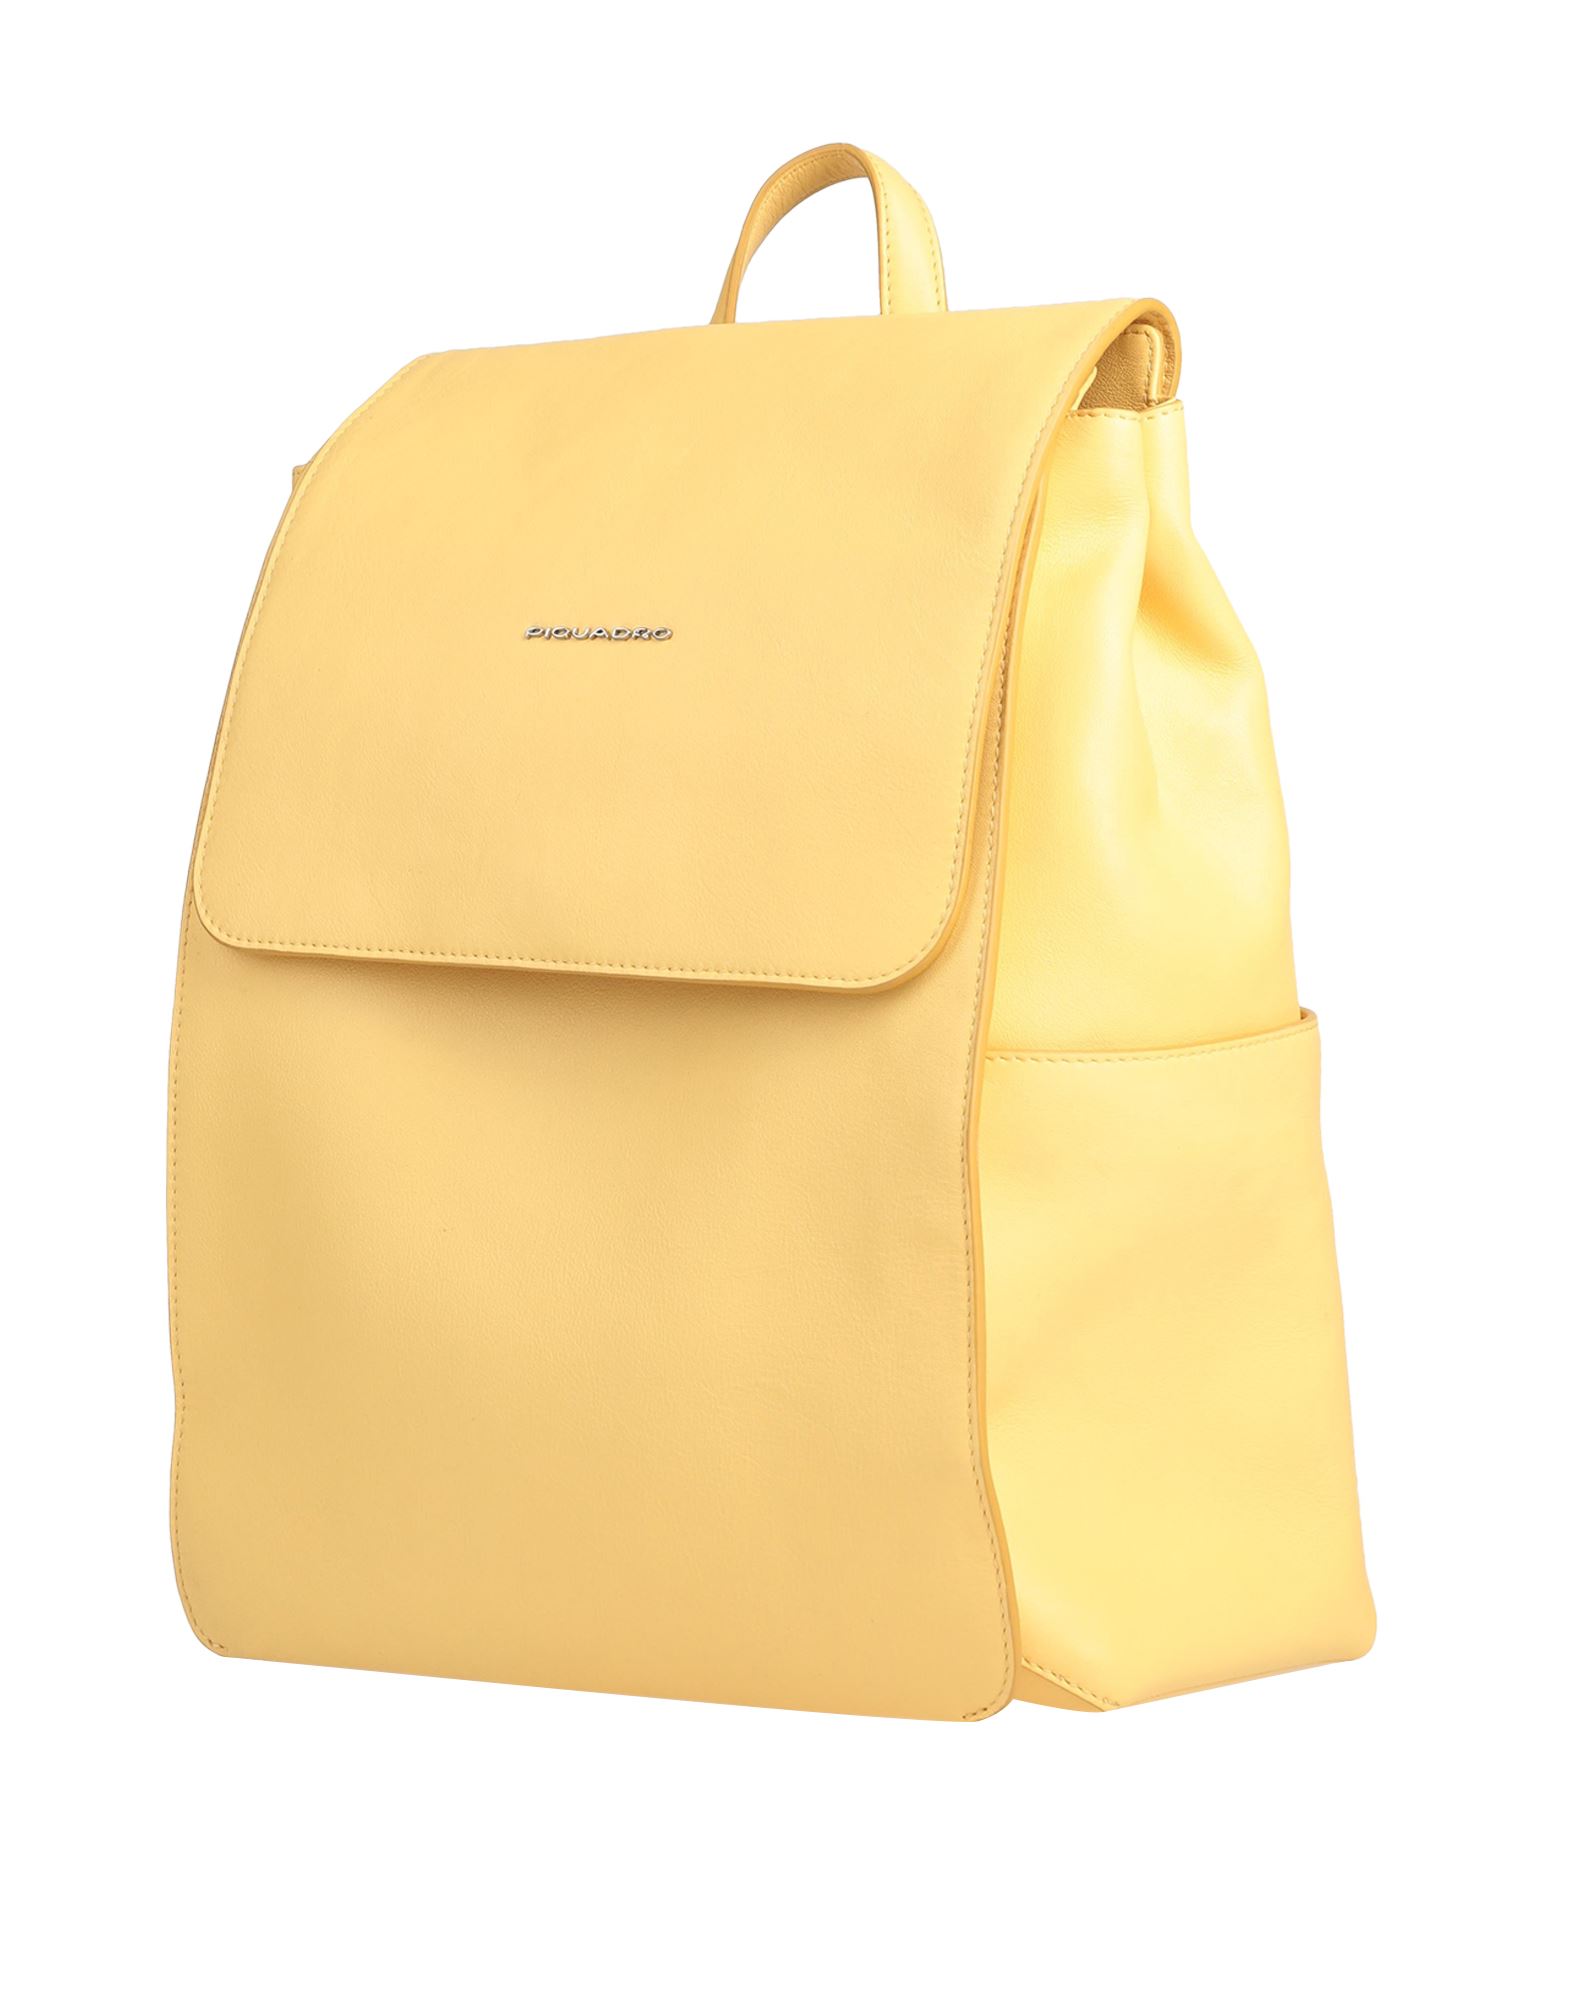 Piquadro Backpacks In Yellow